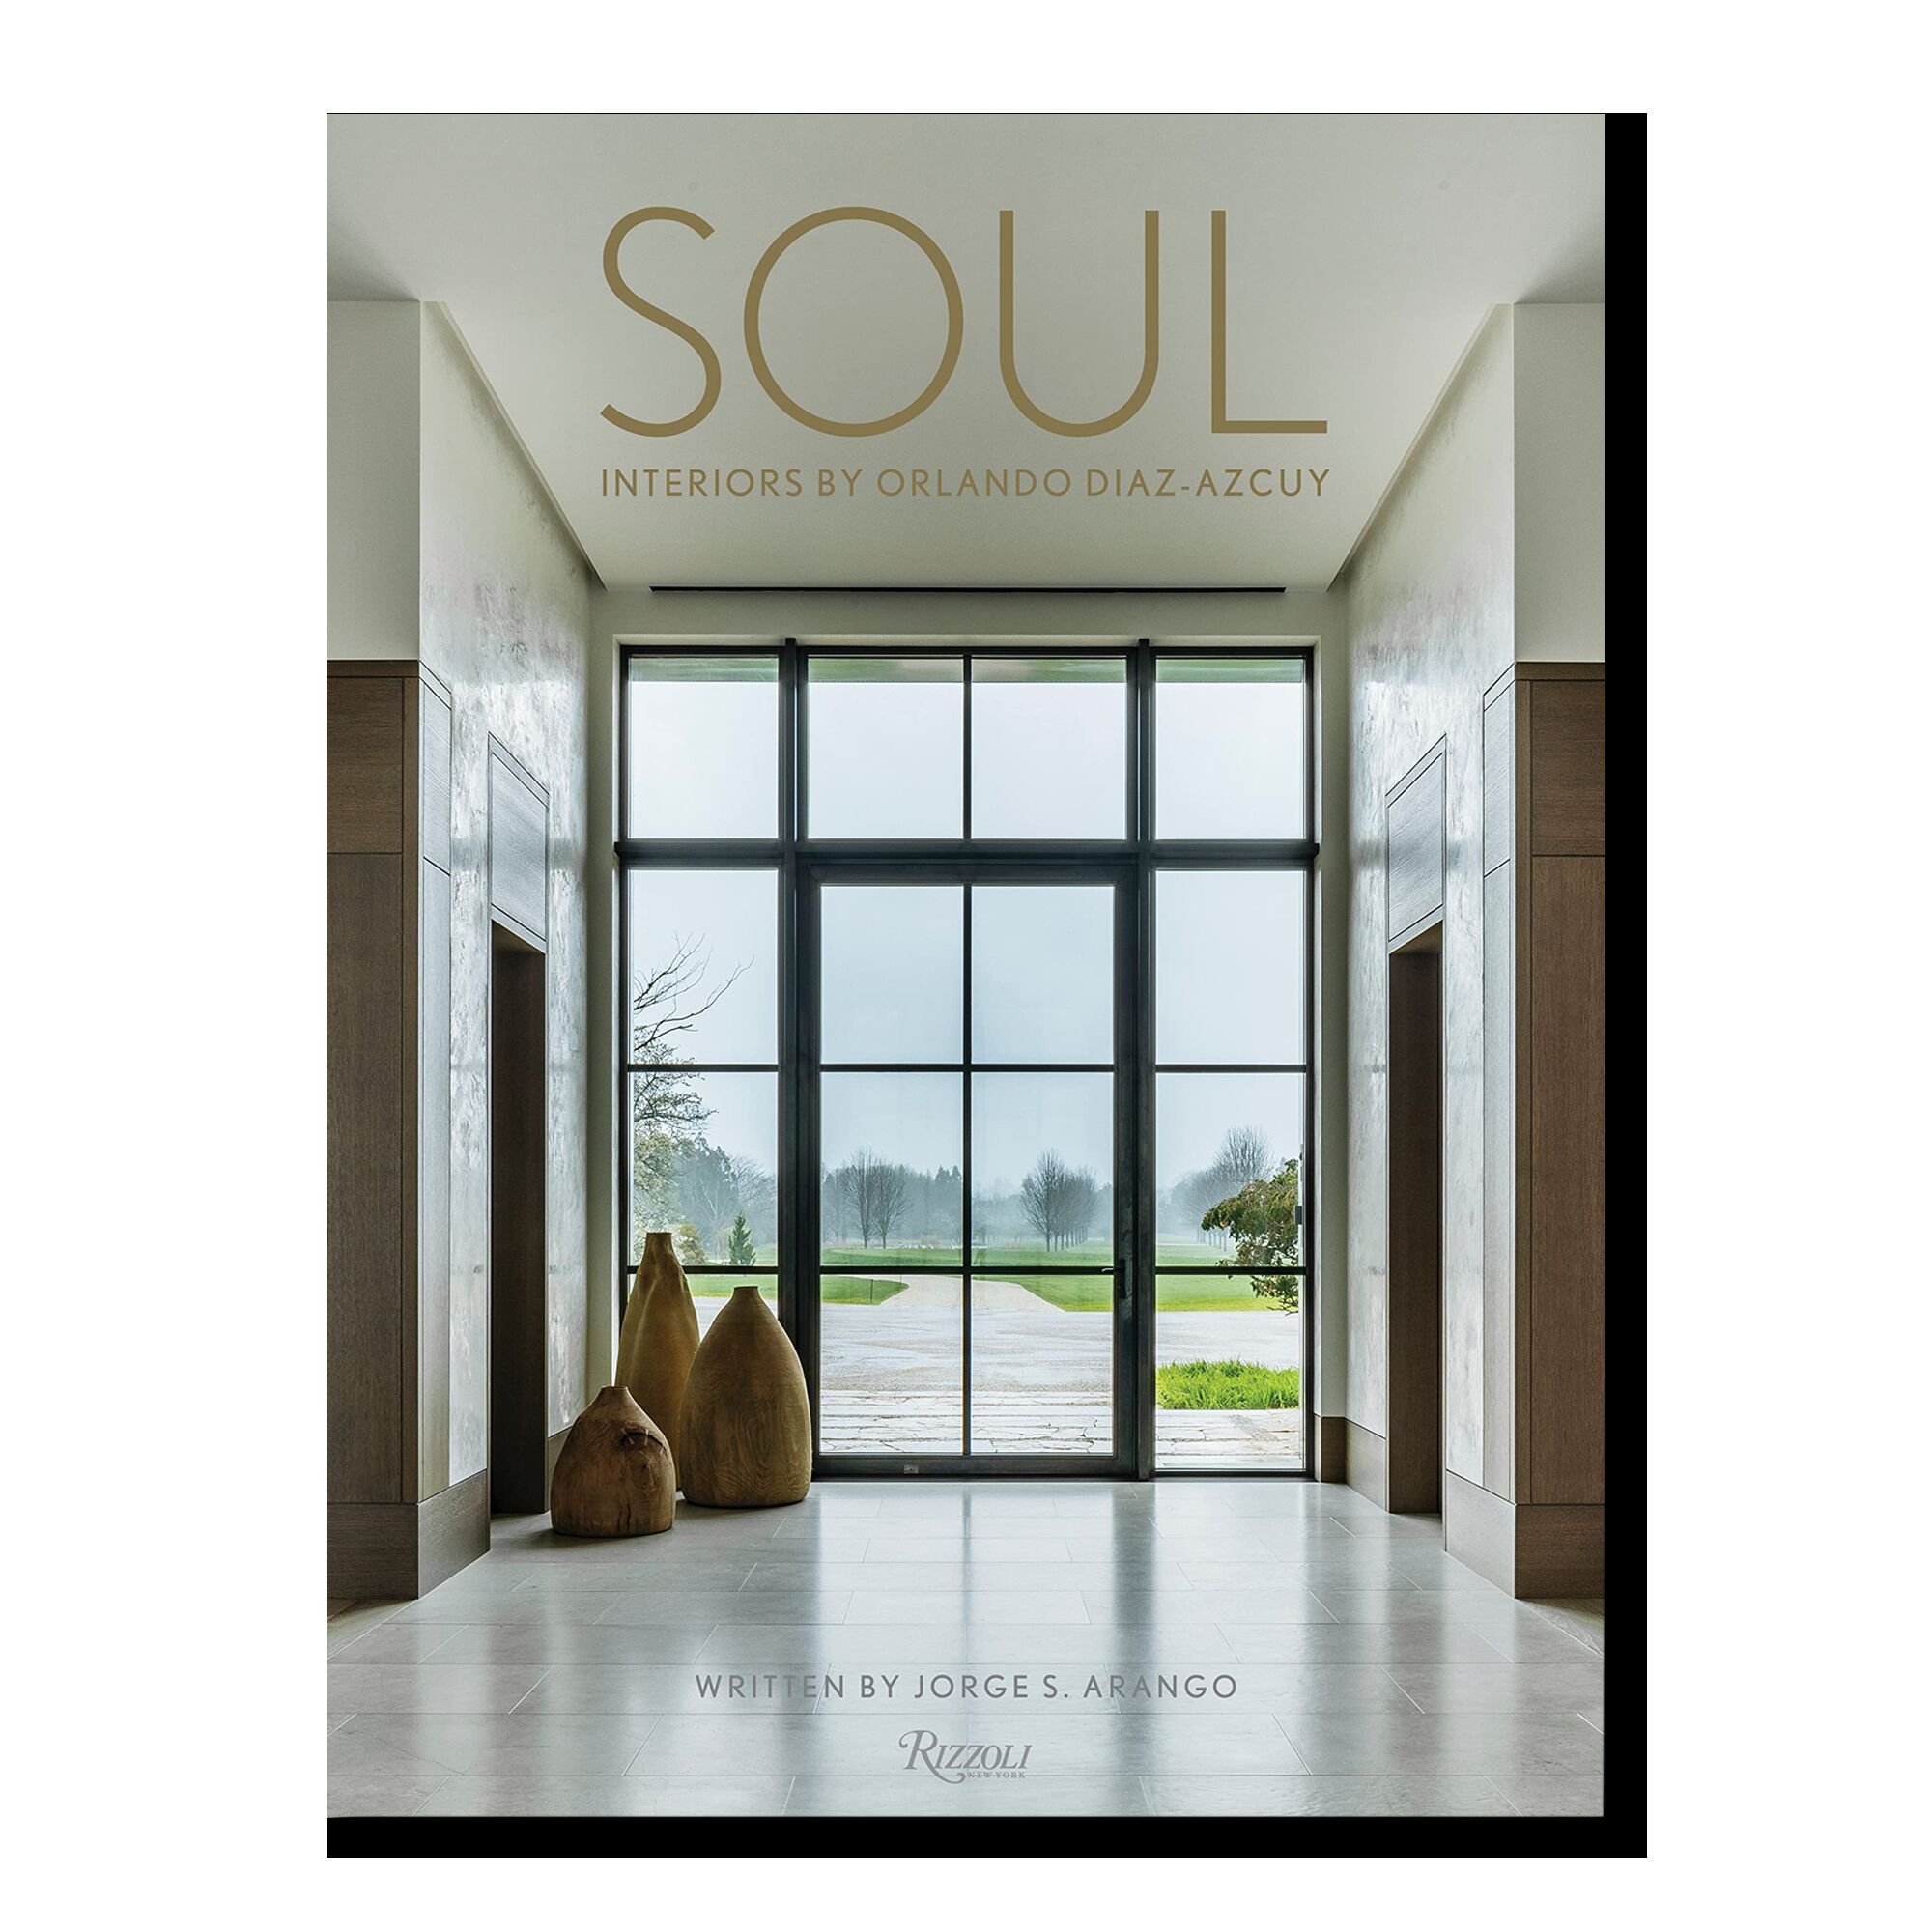 Soul: The Interior Design of Orlando Diaz-Azcuy